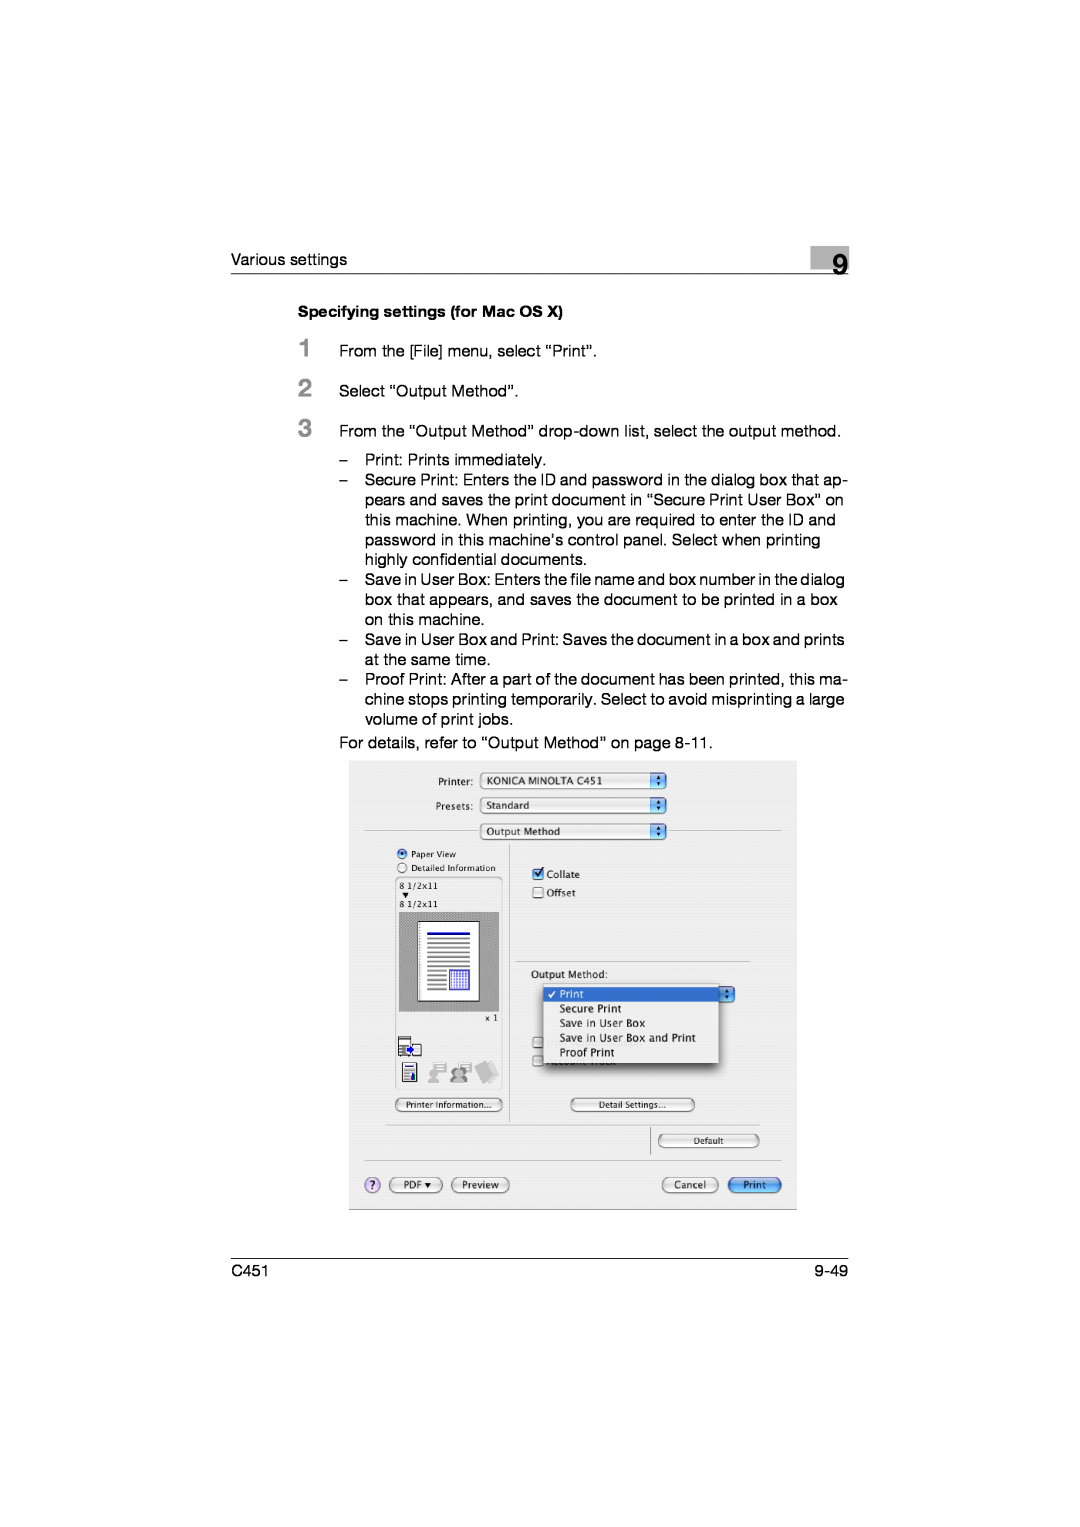 Konica Minolta C451 manual 1 2 3, Specifying settings for Mac OS 